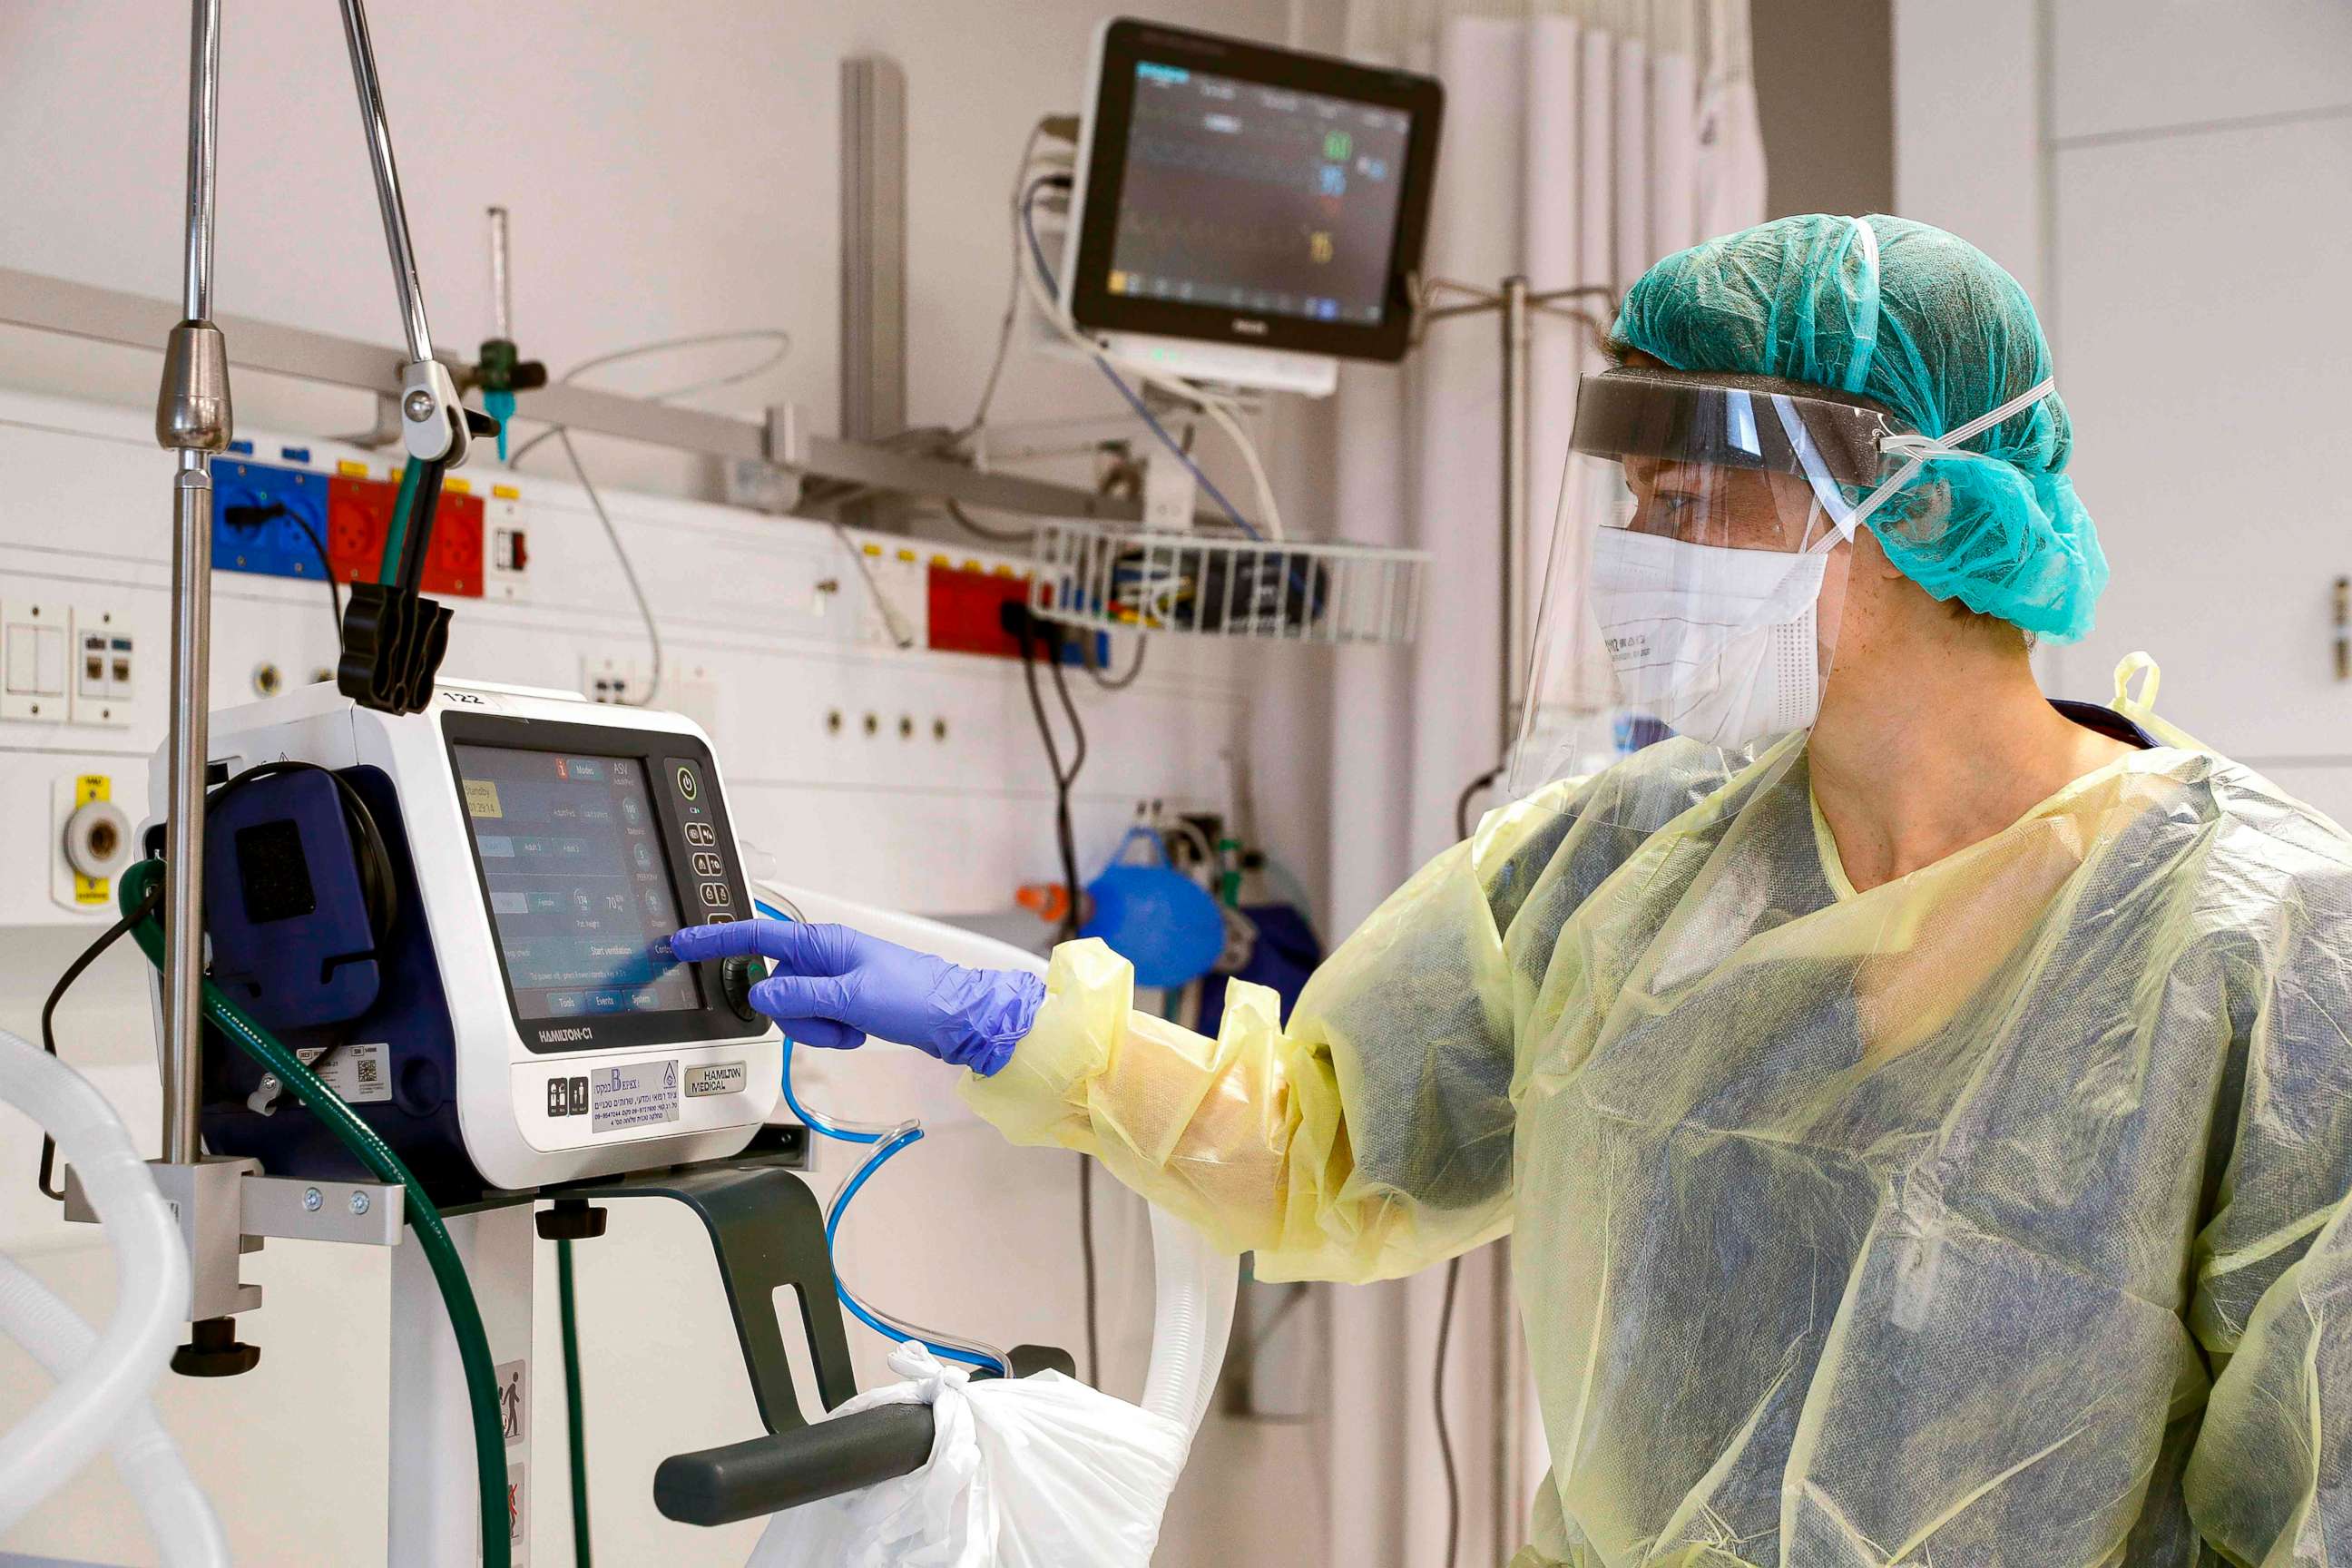 PHOTO: A doctor checks a medical ventilator control panel in a hospital ward during a press presentation at Samson Assuta Ashod University Hospital in Ashdod, Israel, March 16, 2020.